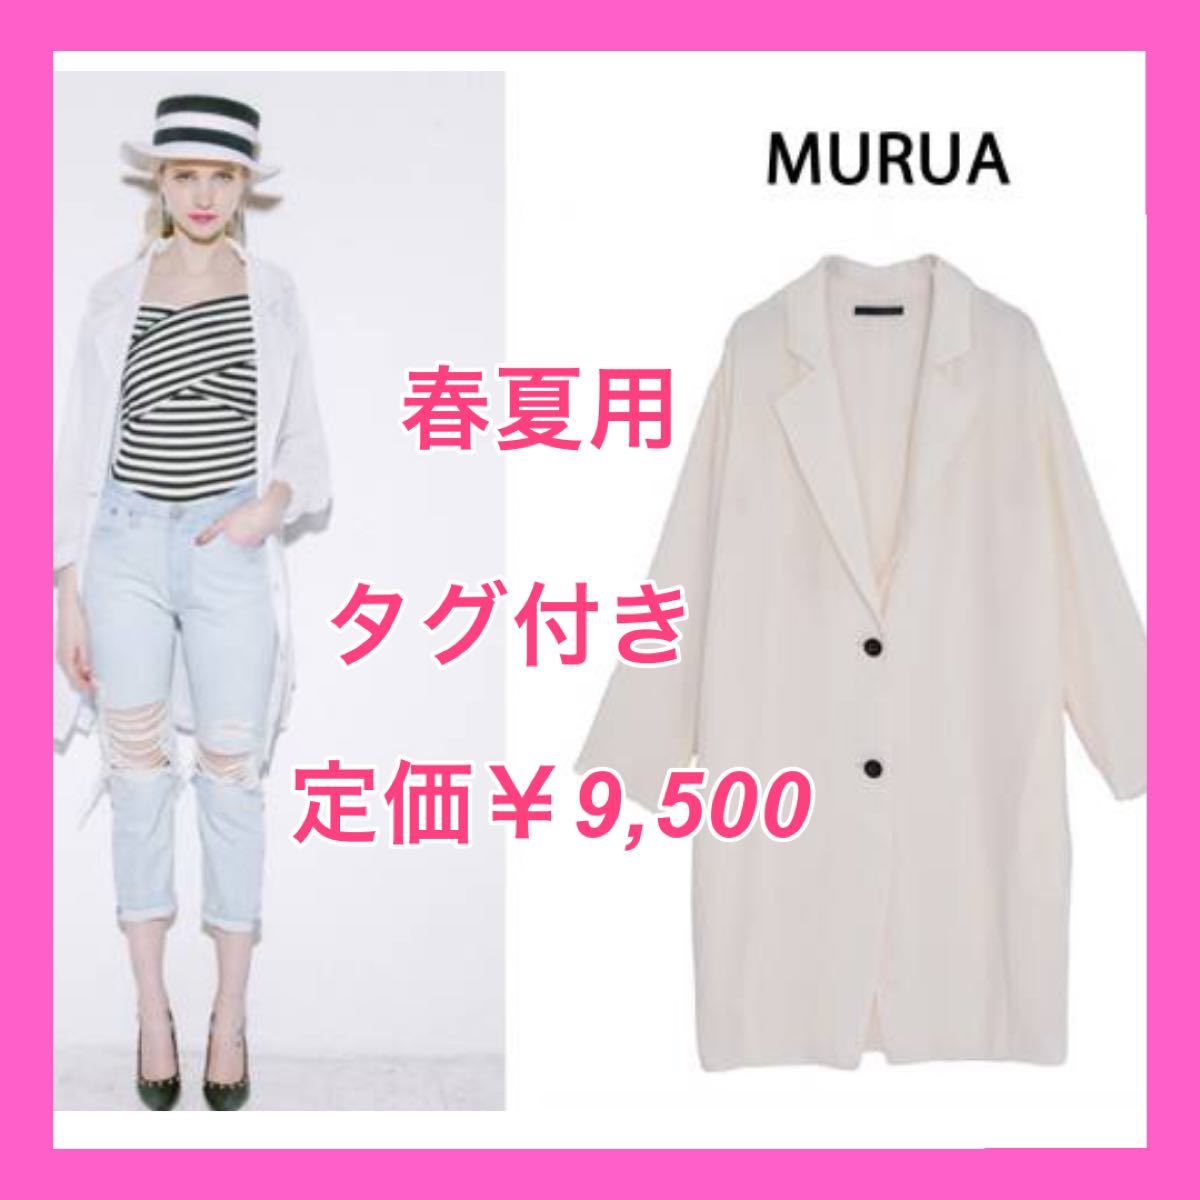 murua エアリージャケット ロング 白 ホワイト 春 夏 秋 フリーサイズ M L テーラードジャケット スプリングジャケット